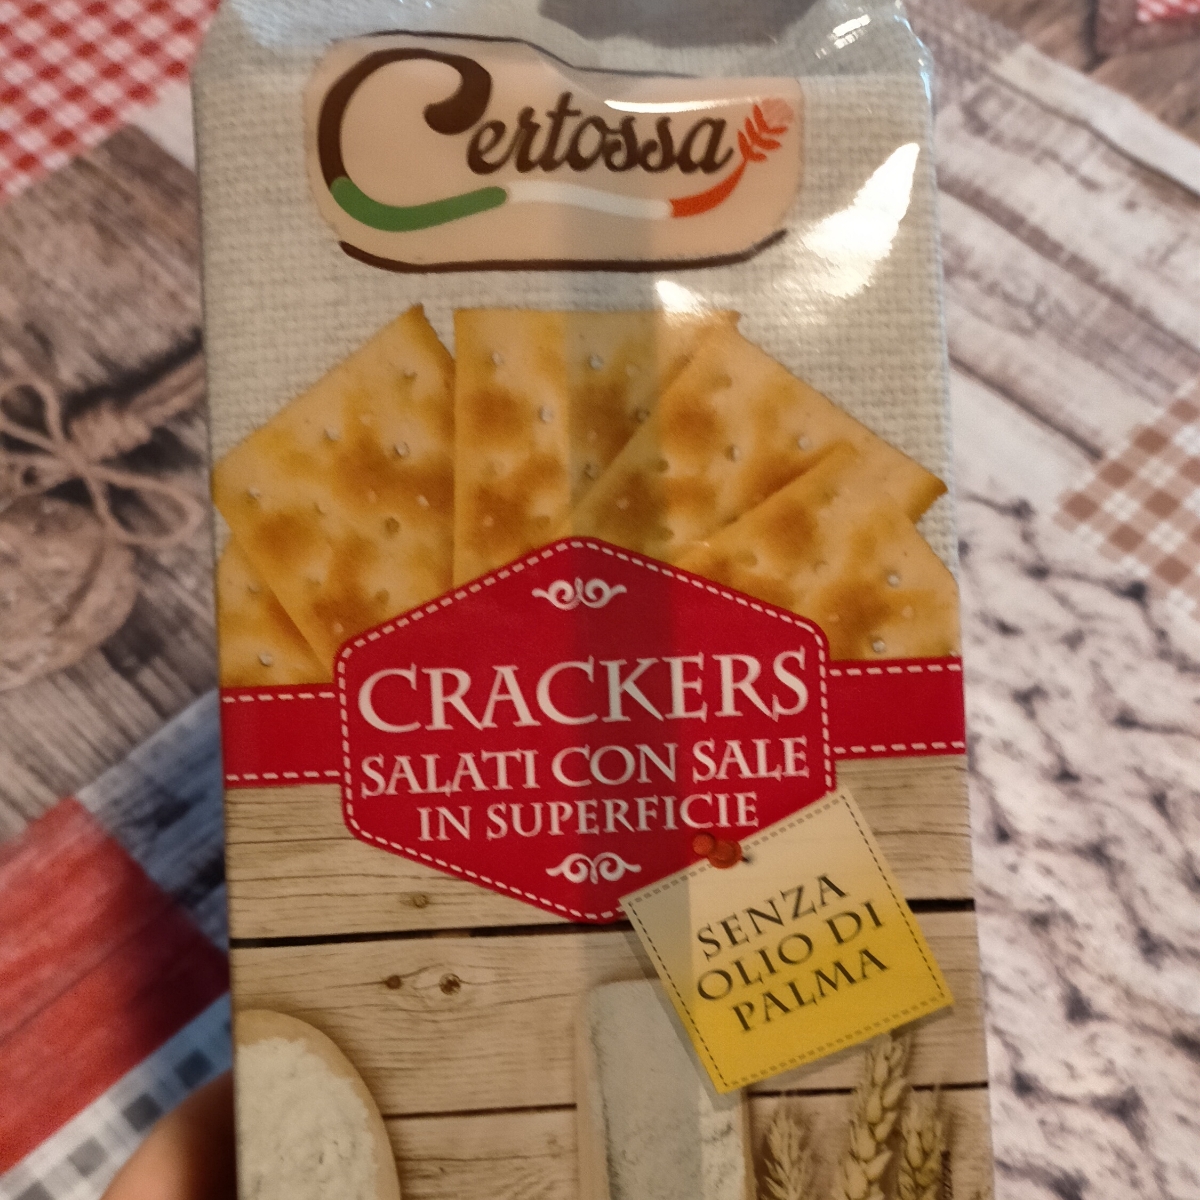 Certossa Crackers Salati con Sale In Superficie Review